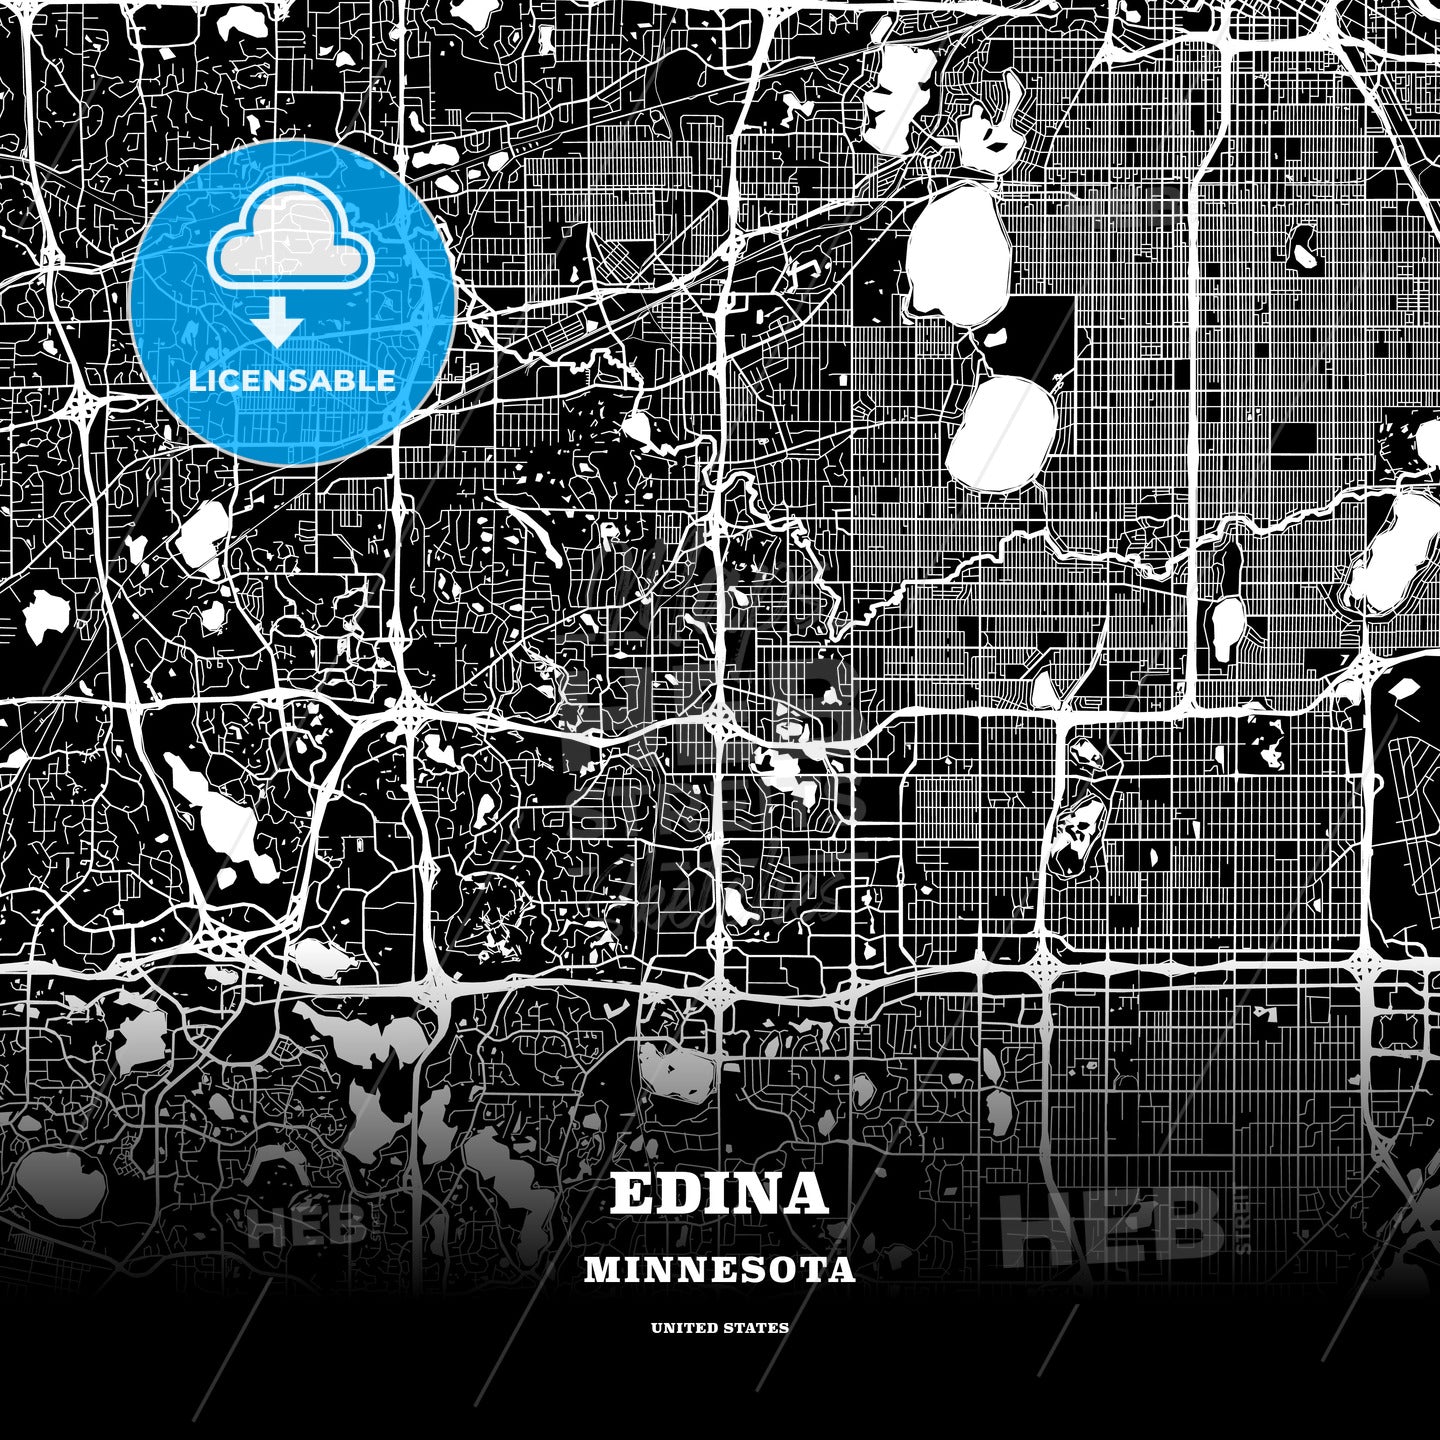 Edina, Minnesota, USA map